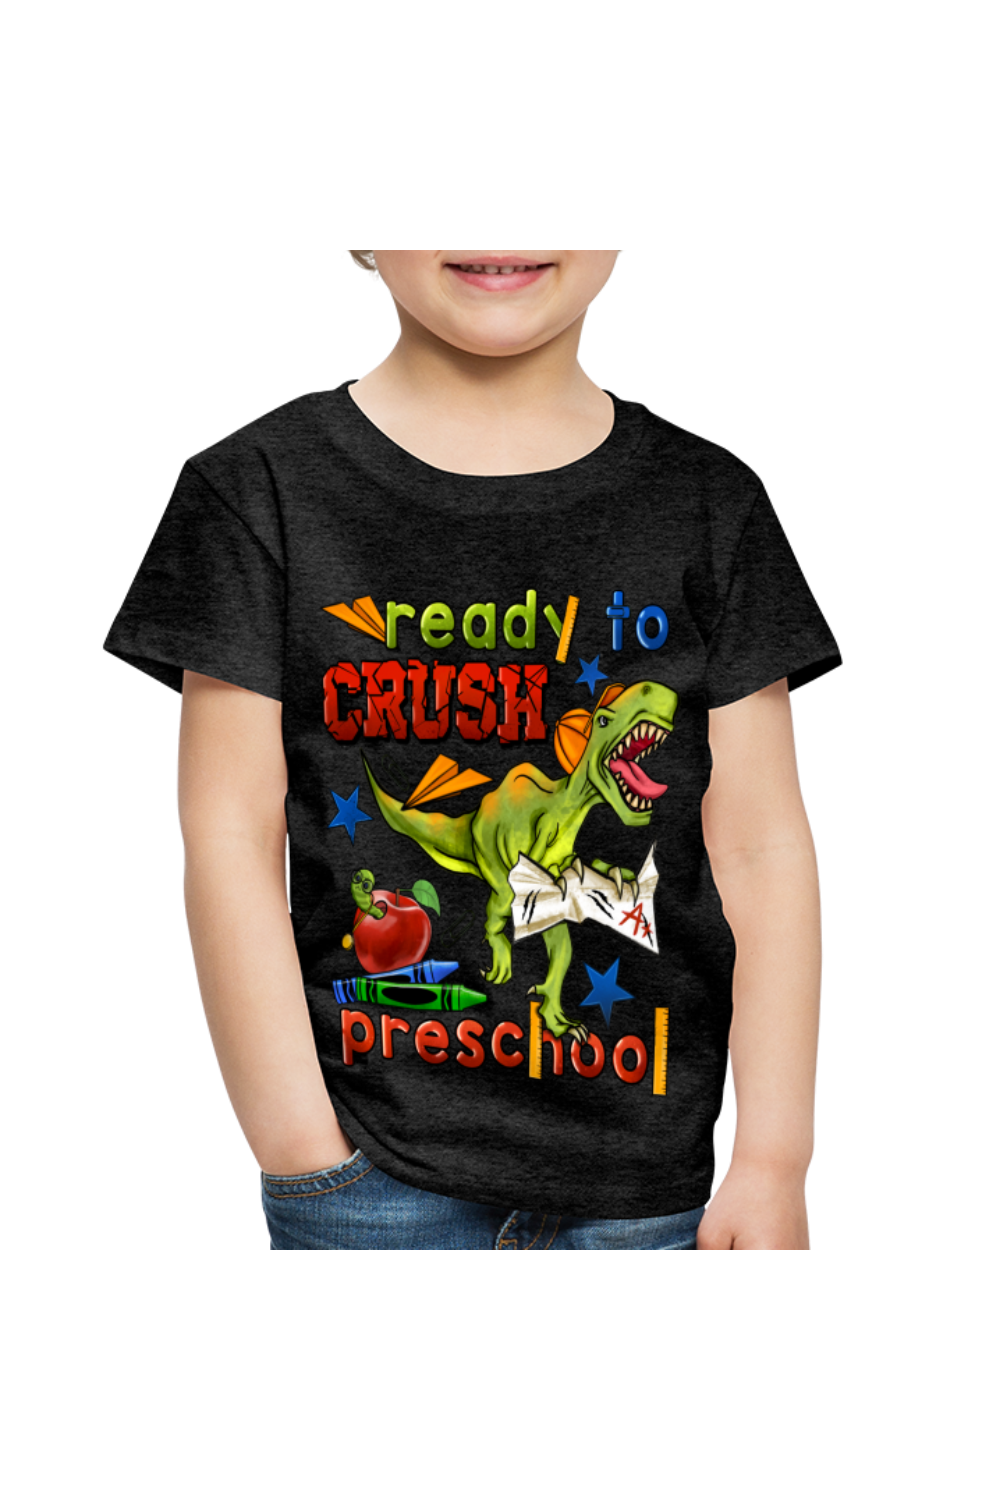 Toddler Boys Ready To Crush Preschool Short Sleeve Tee Shirt for Back To School - charcoal grey - NicholesGifts.online